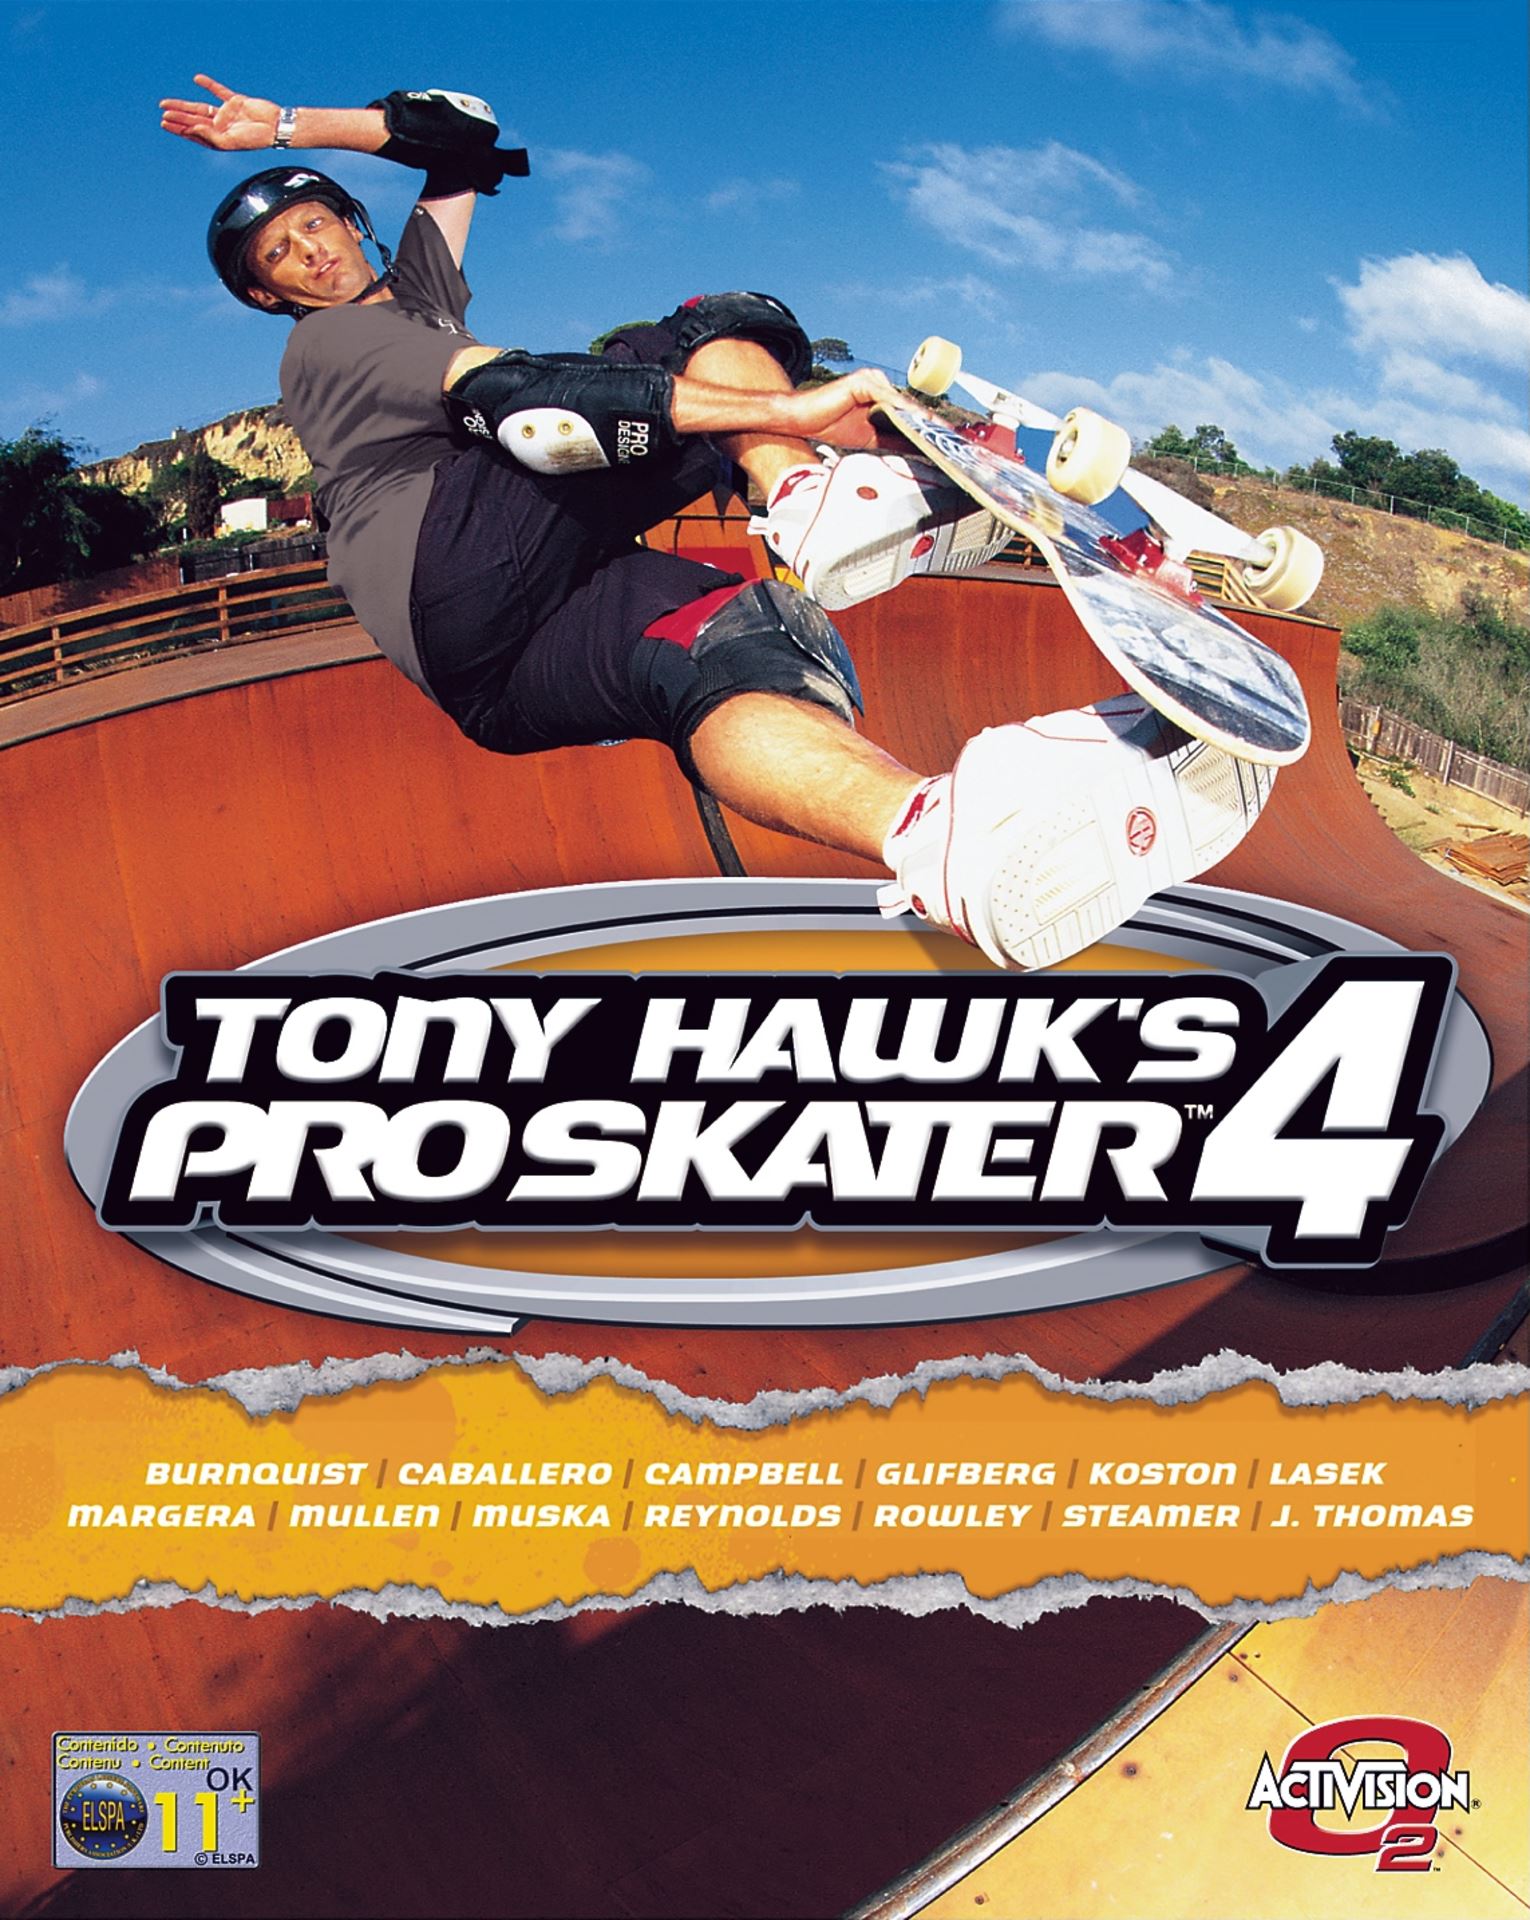 Tony Hawk's Pro Skater 4, Tony Hawk's Games Wiki